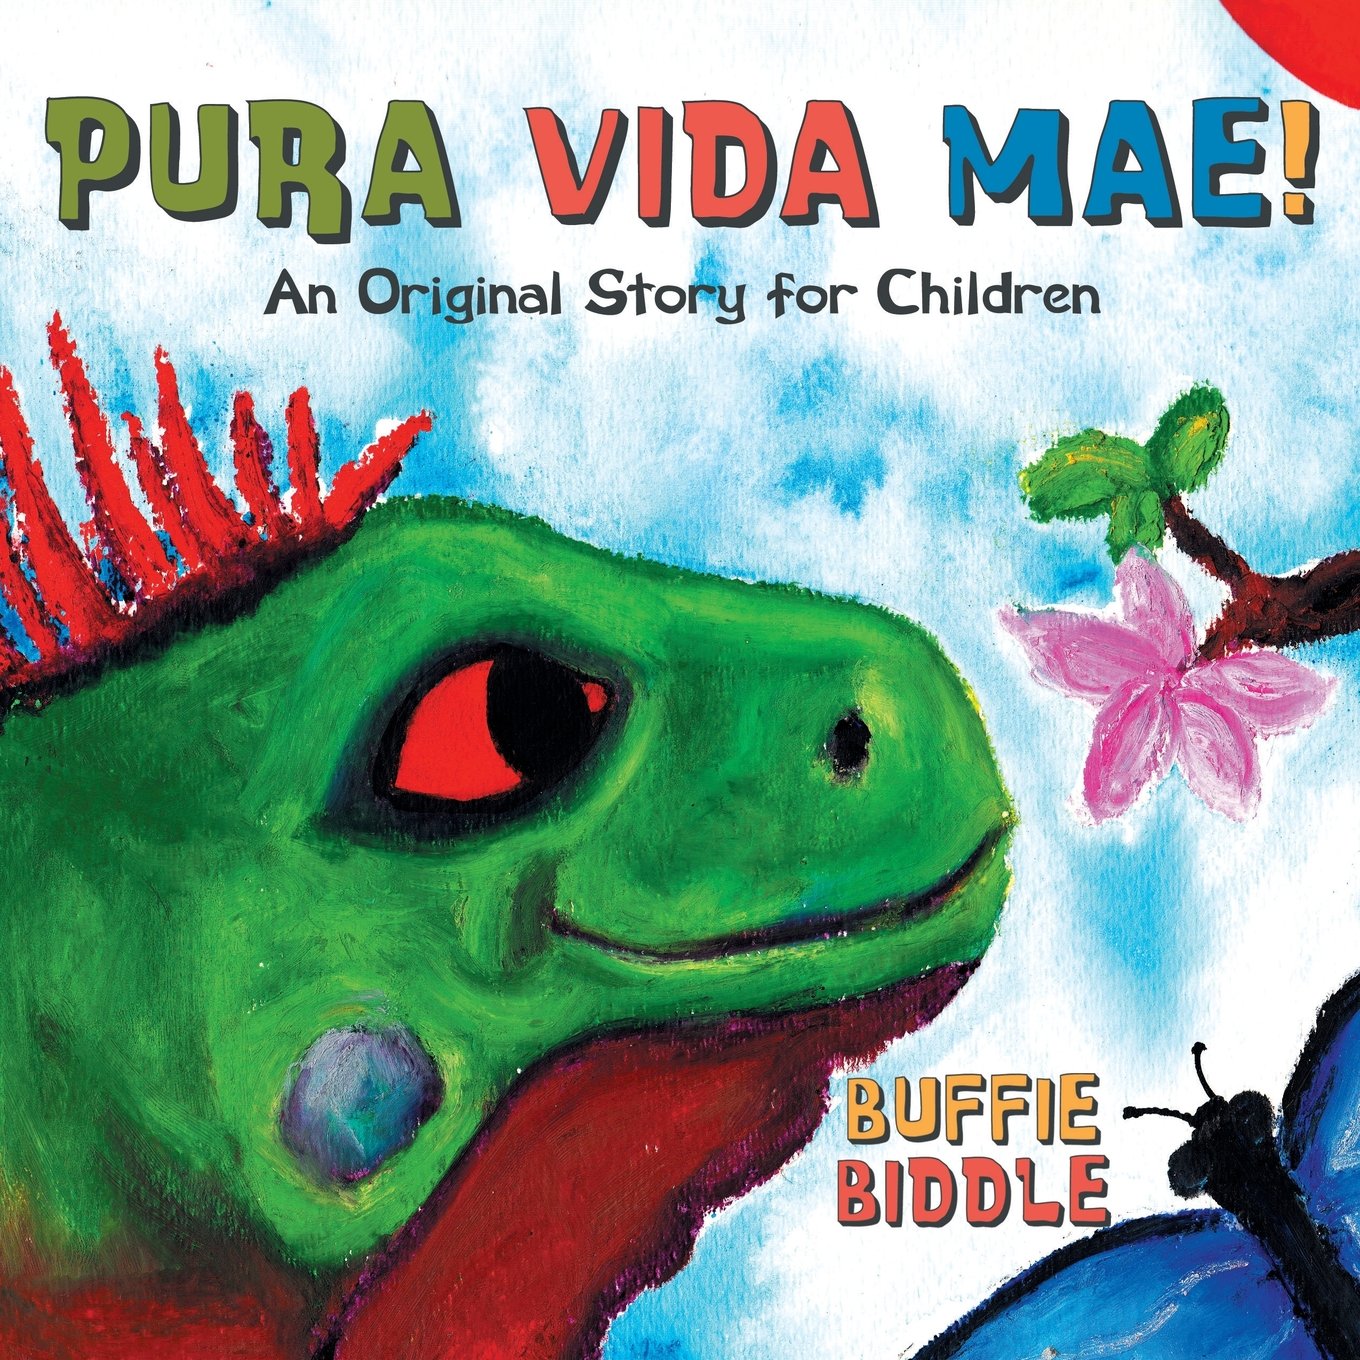 Children's Books on Costa Rica